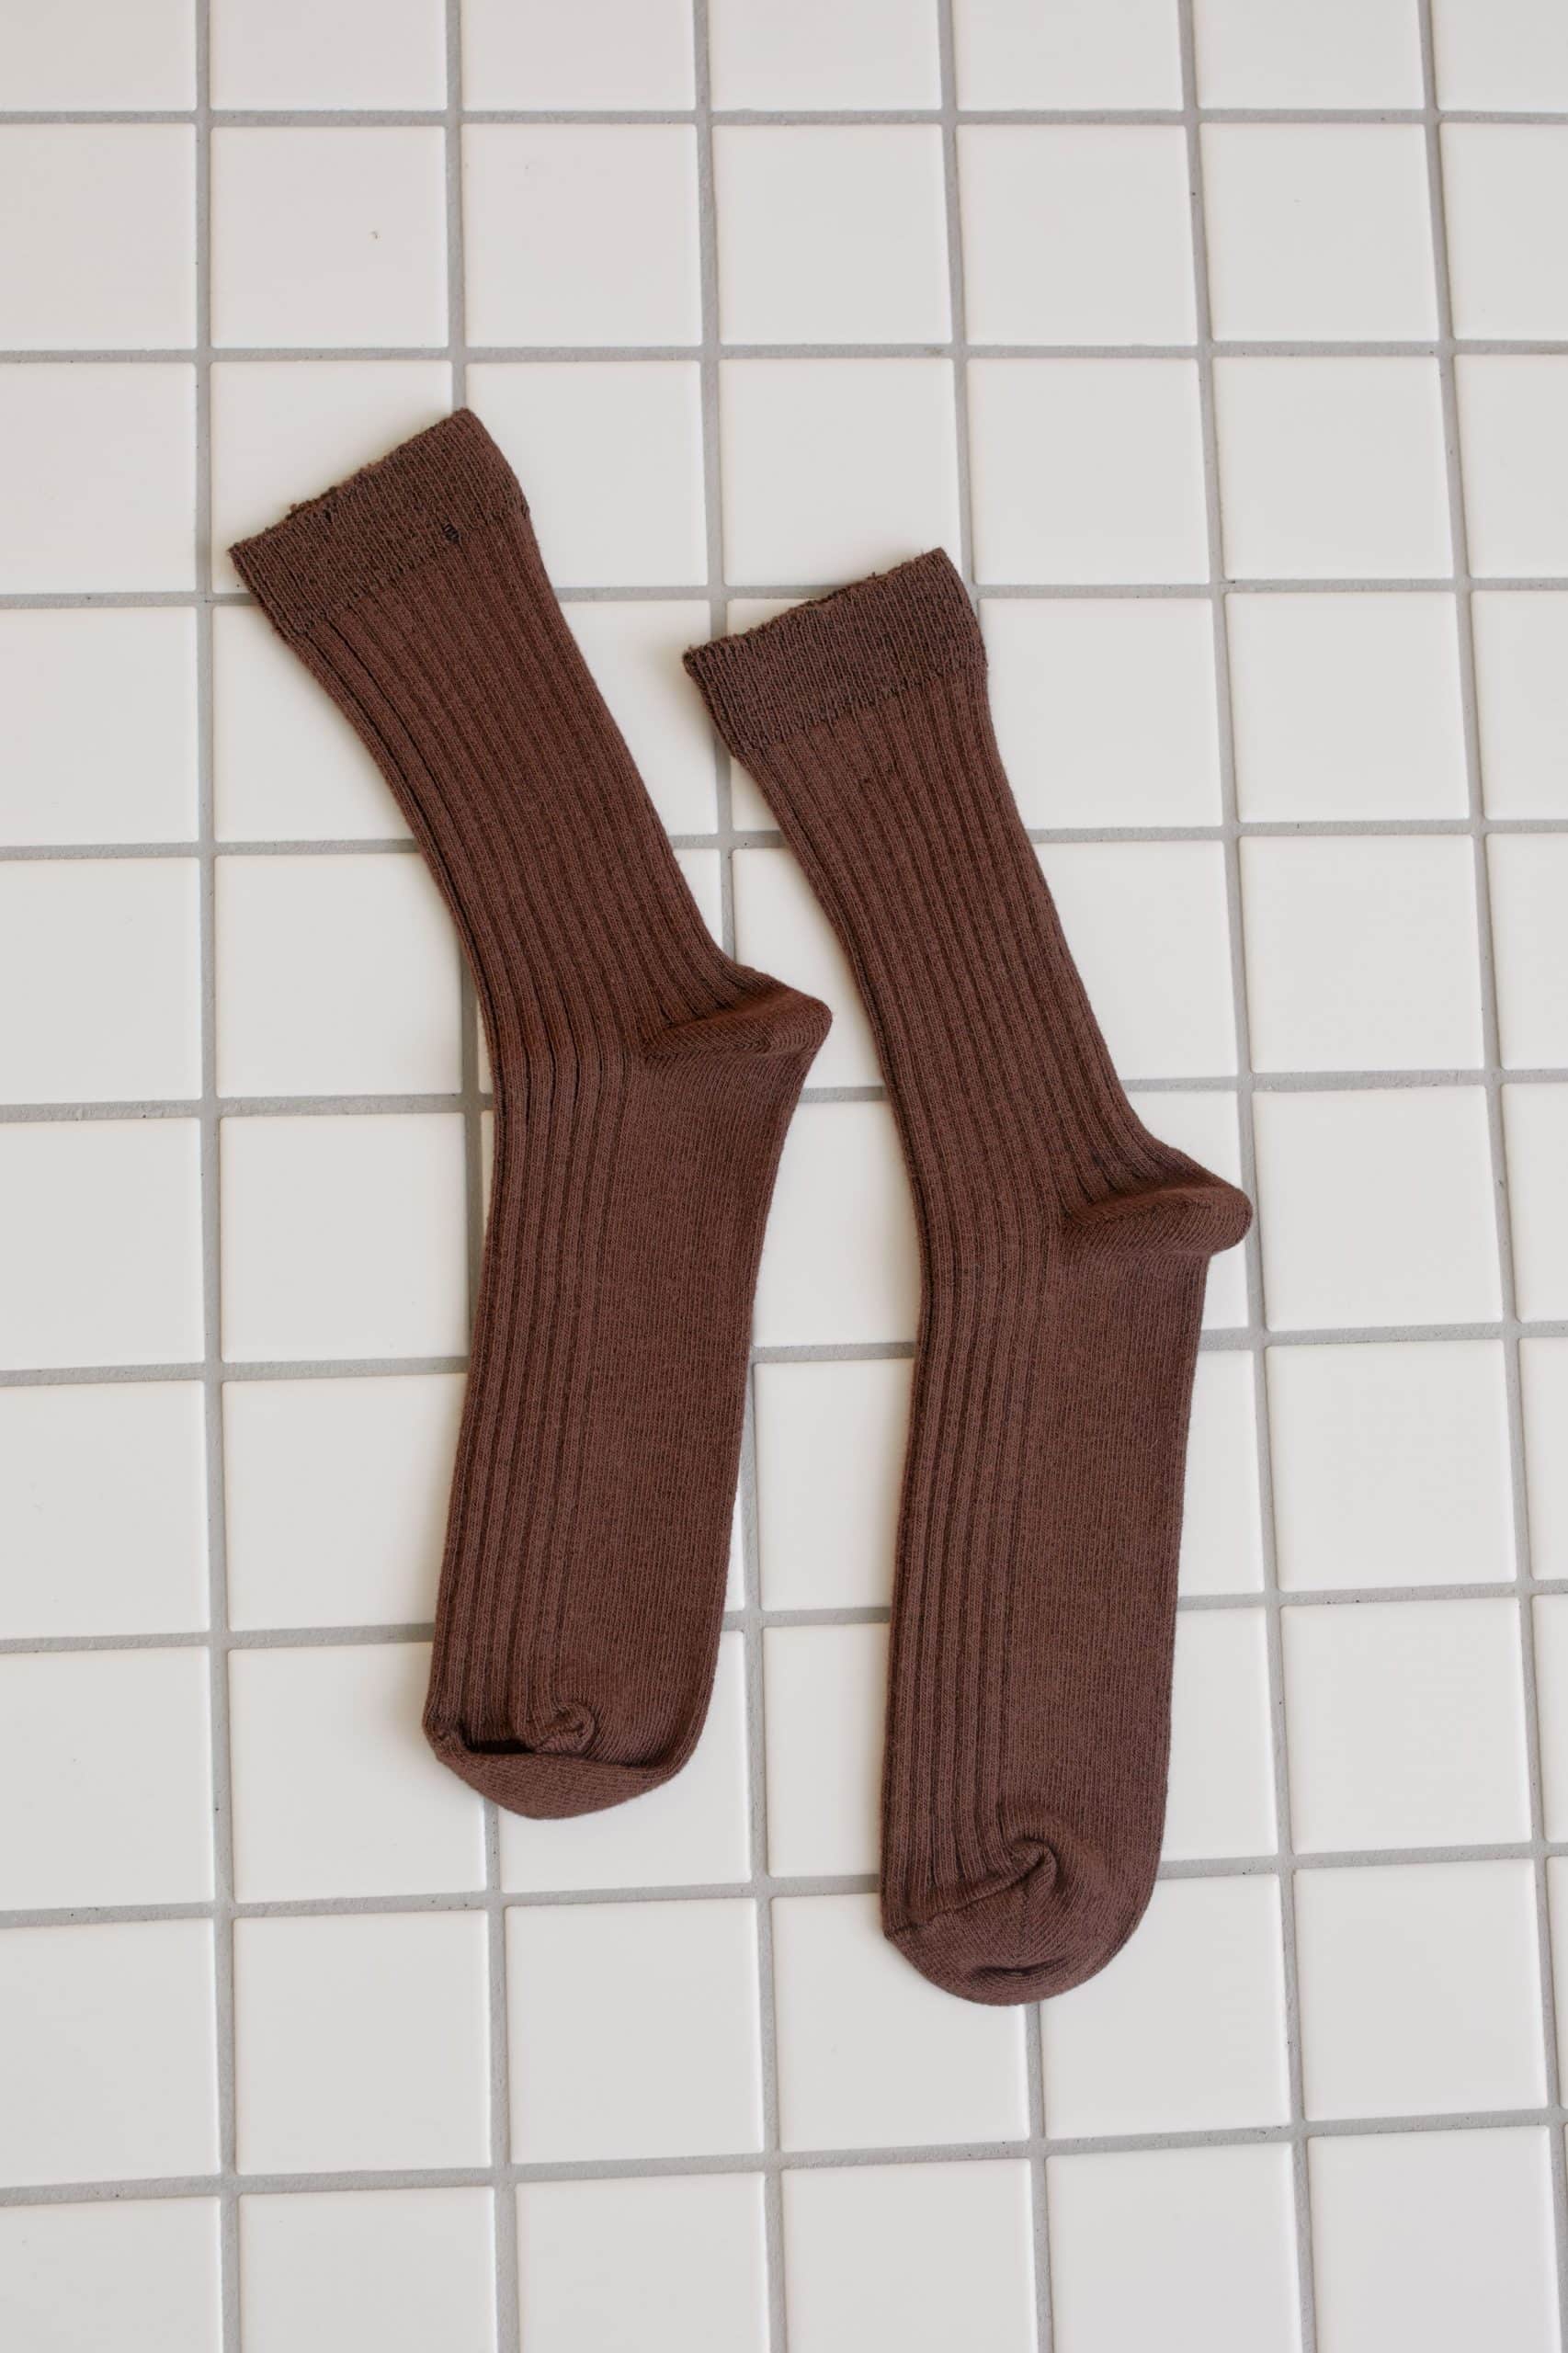 High-quality cotton socks